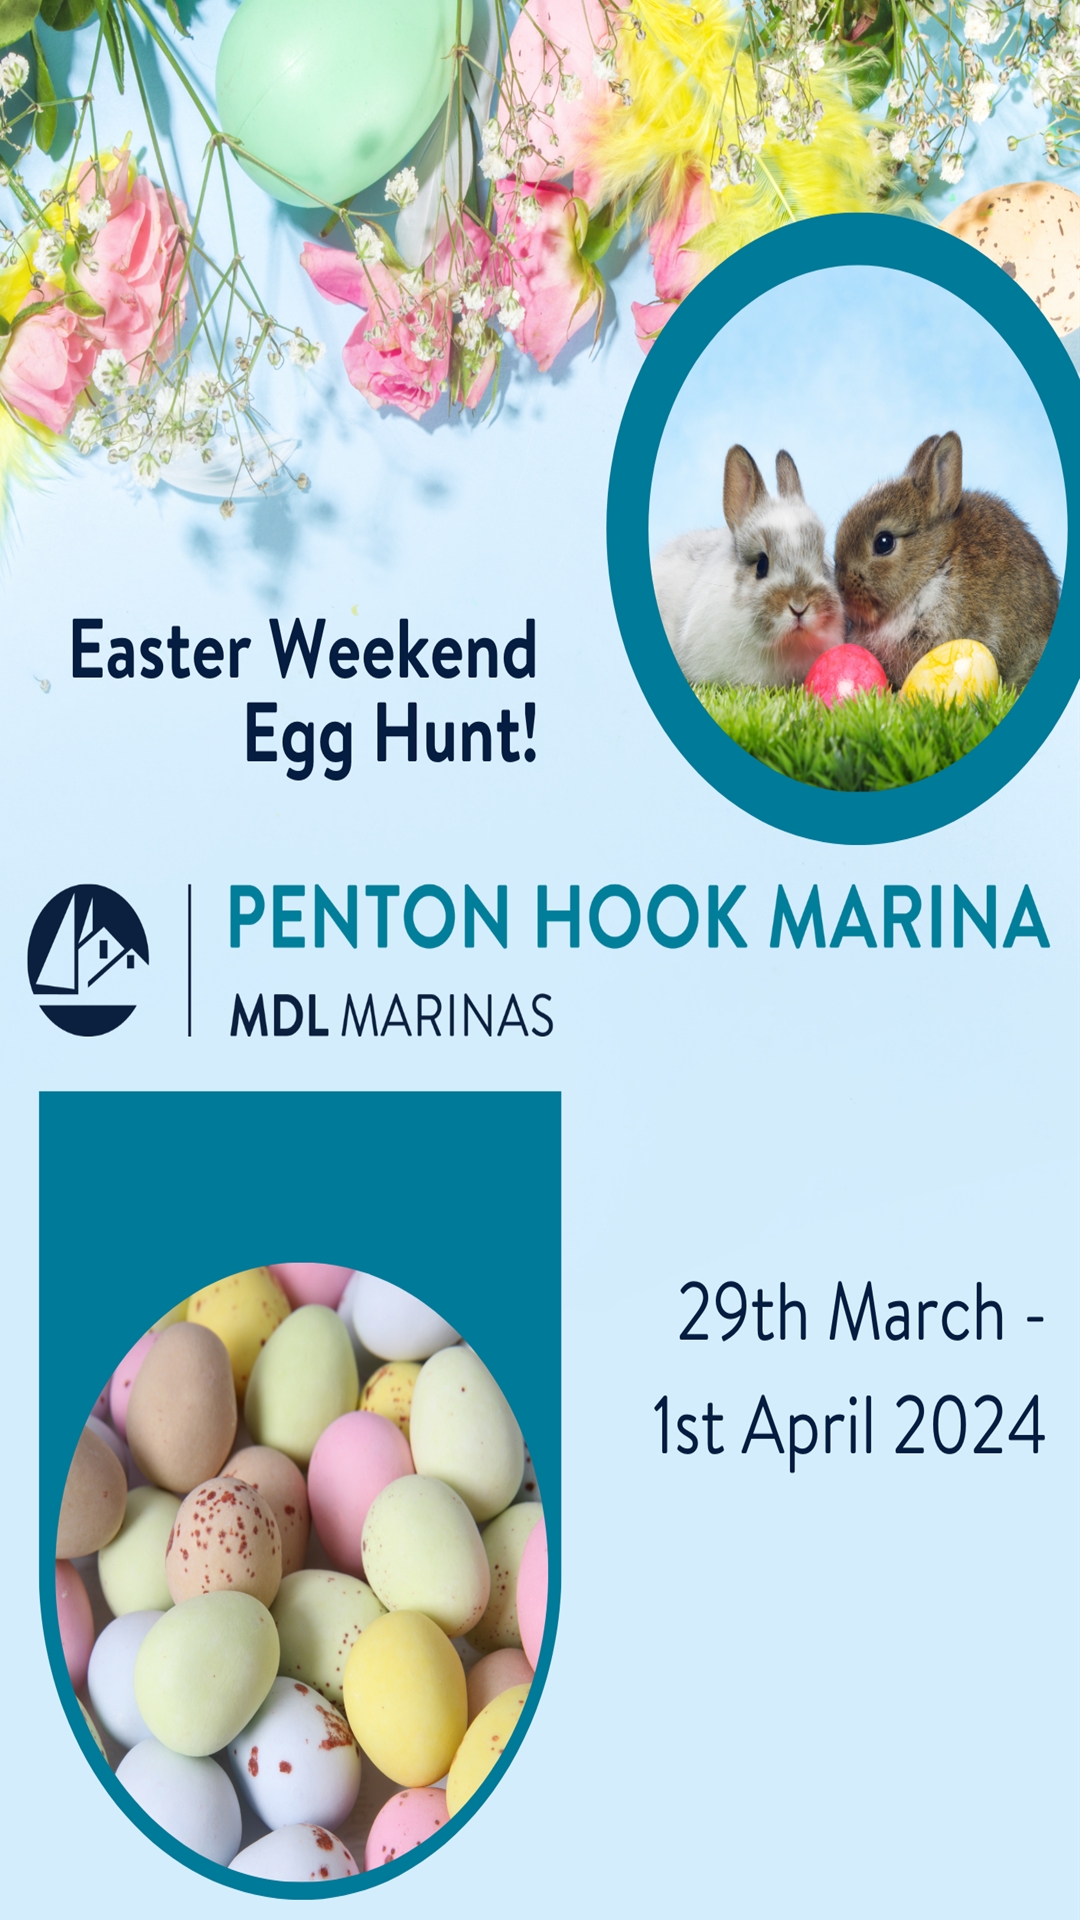 Easter Egg Hunt at Penton Hook Marina